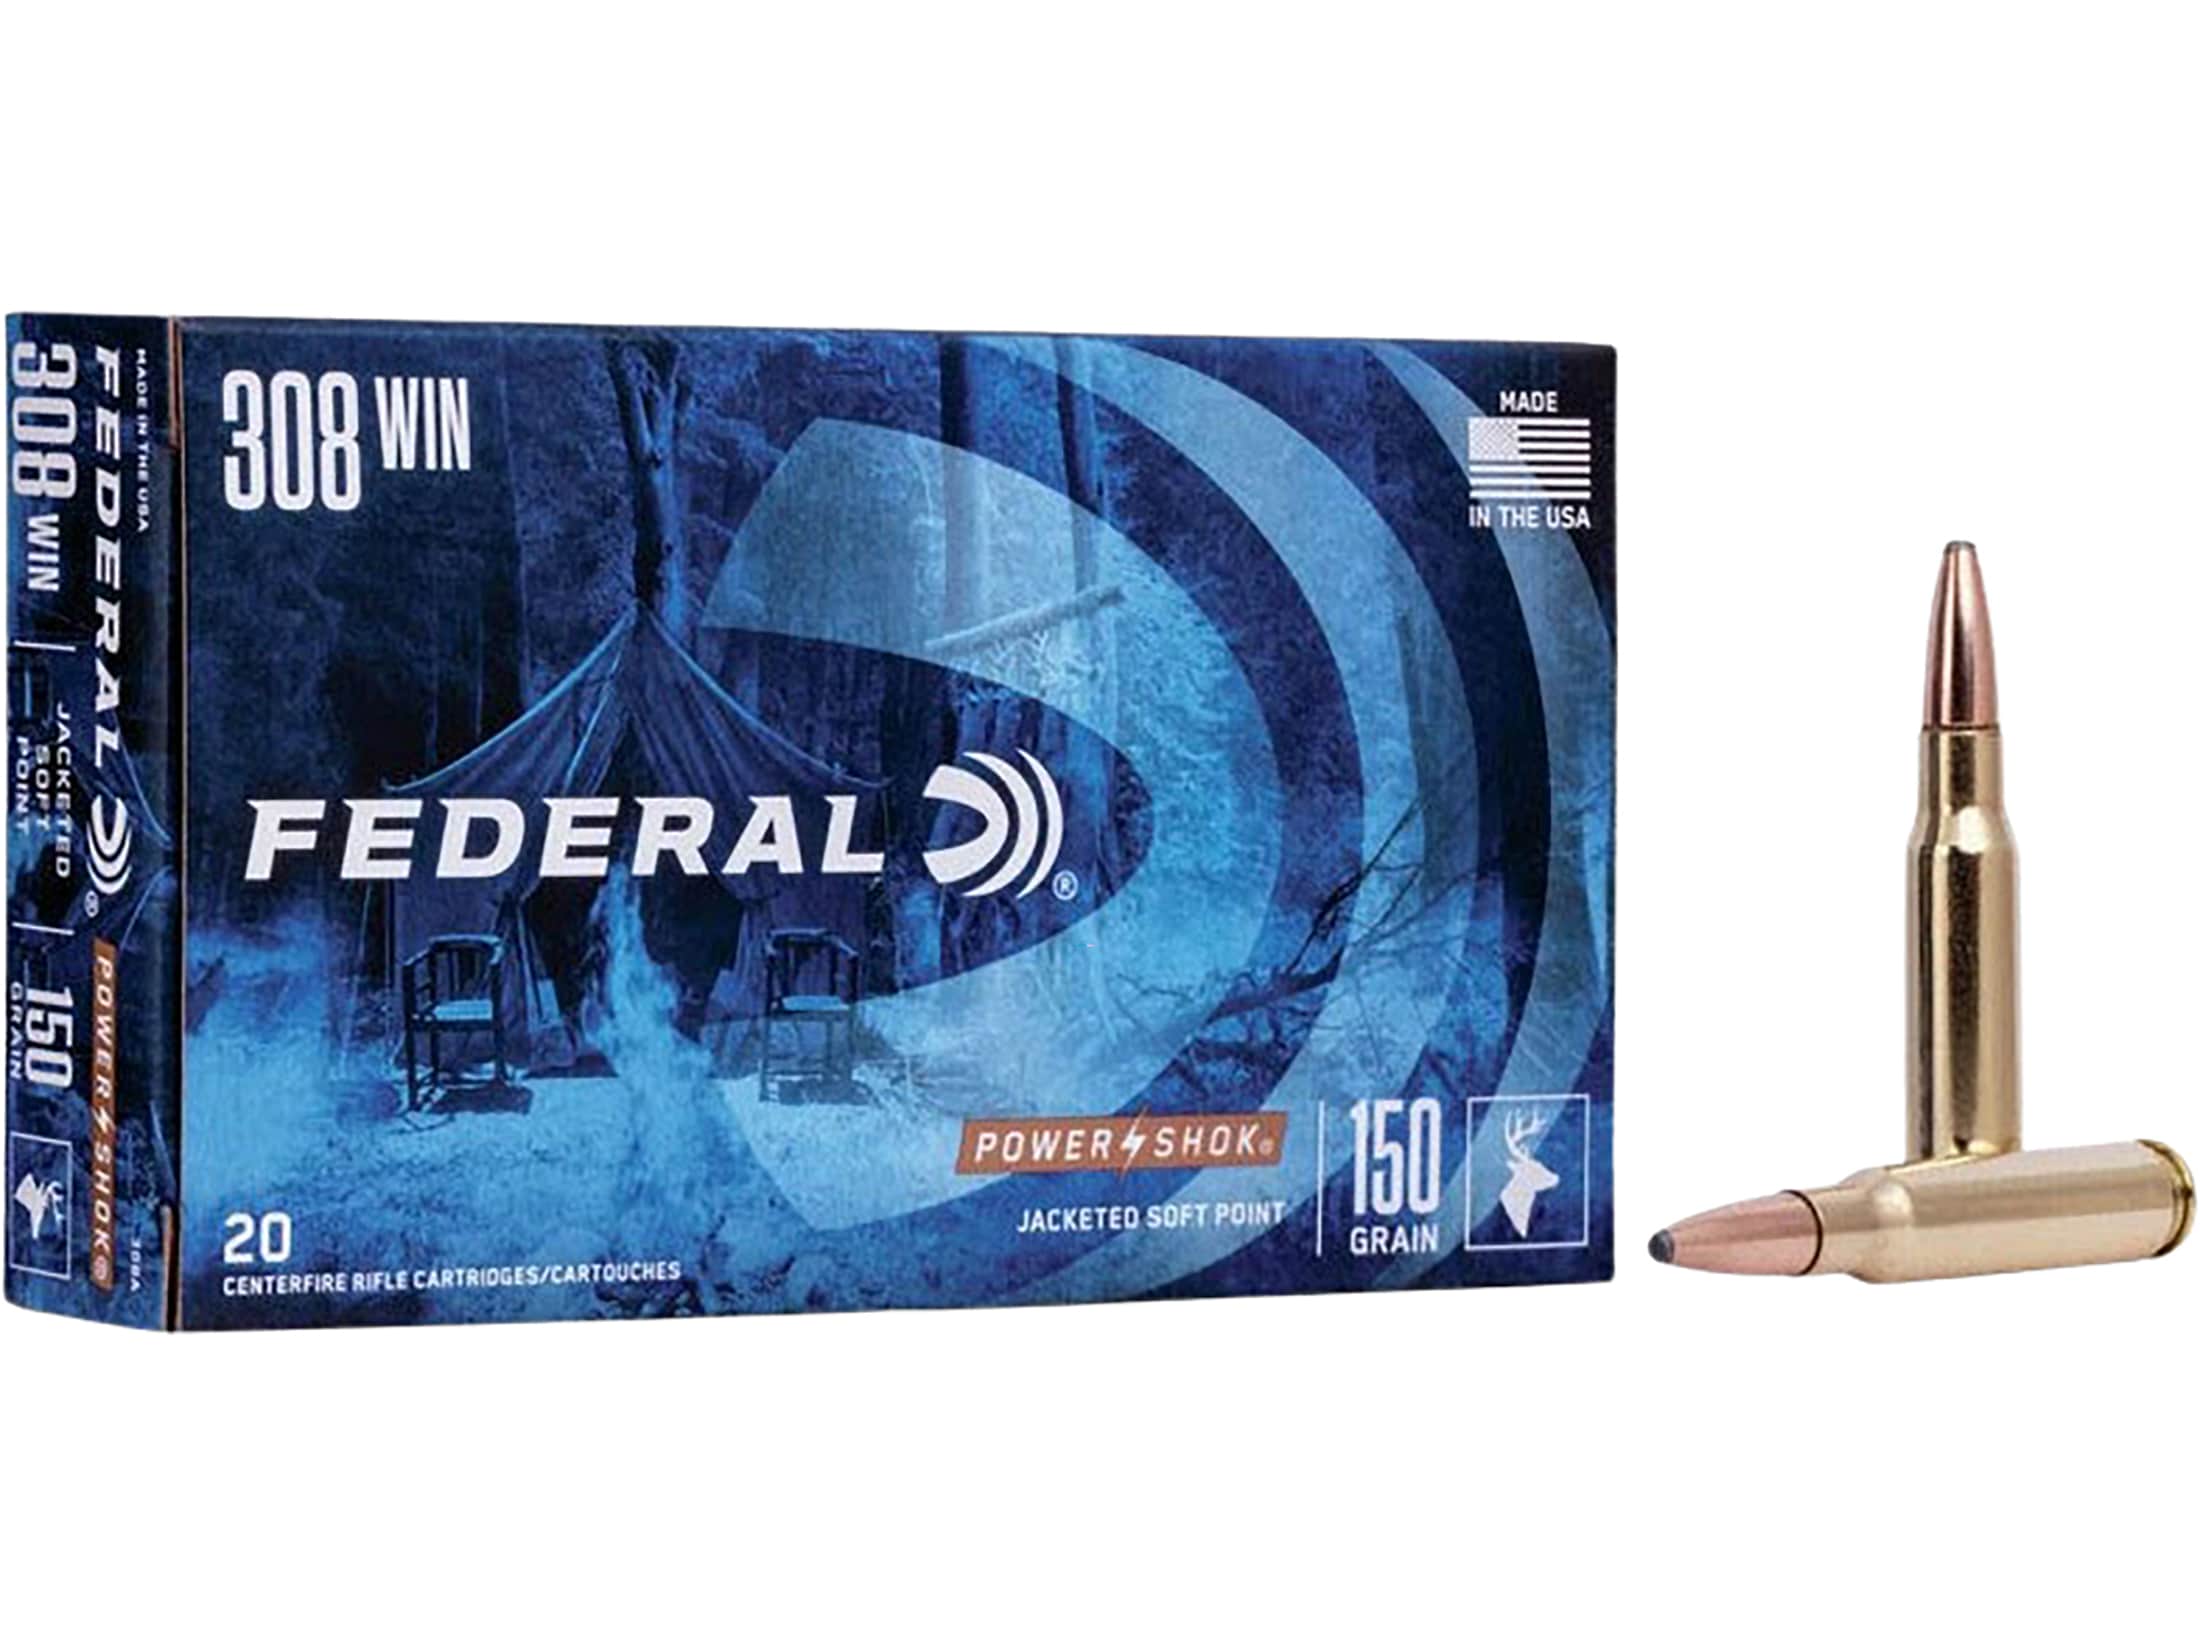 Federal Power-Shok Ammunition 308 Winchester 150 Grain Soft Point Box of 20